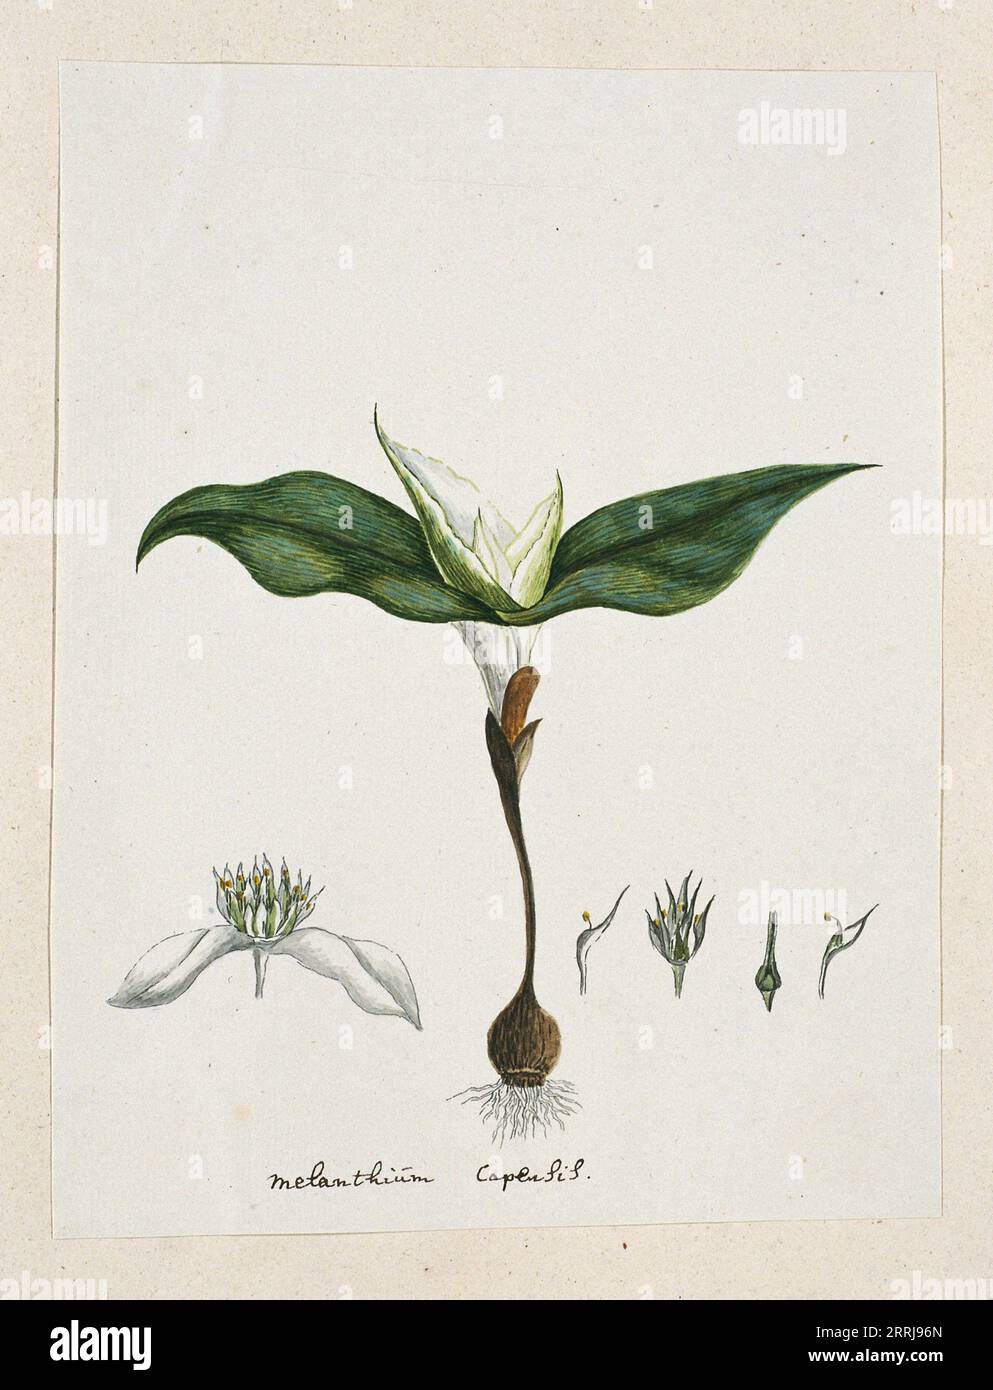 Androcymbium capense (L.) Krause., 1777-1786. Androcymbium Capens (L.) Krause. Stock Photo